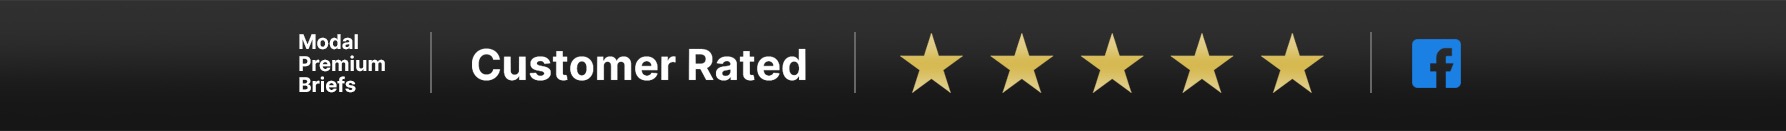 Xebex Customer Rating Band with 5 stars